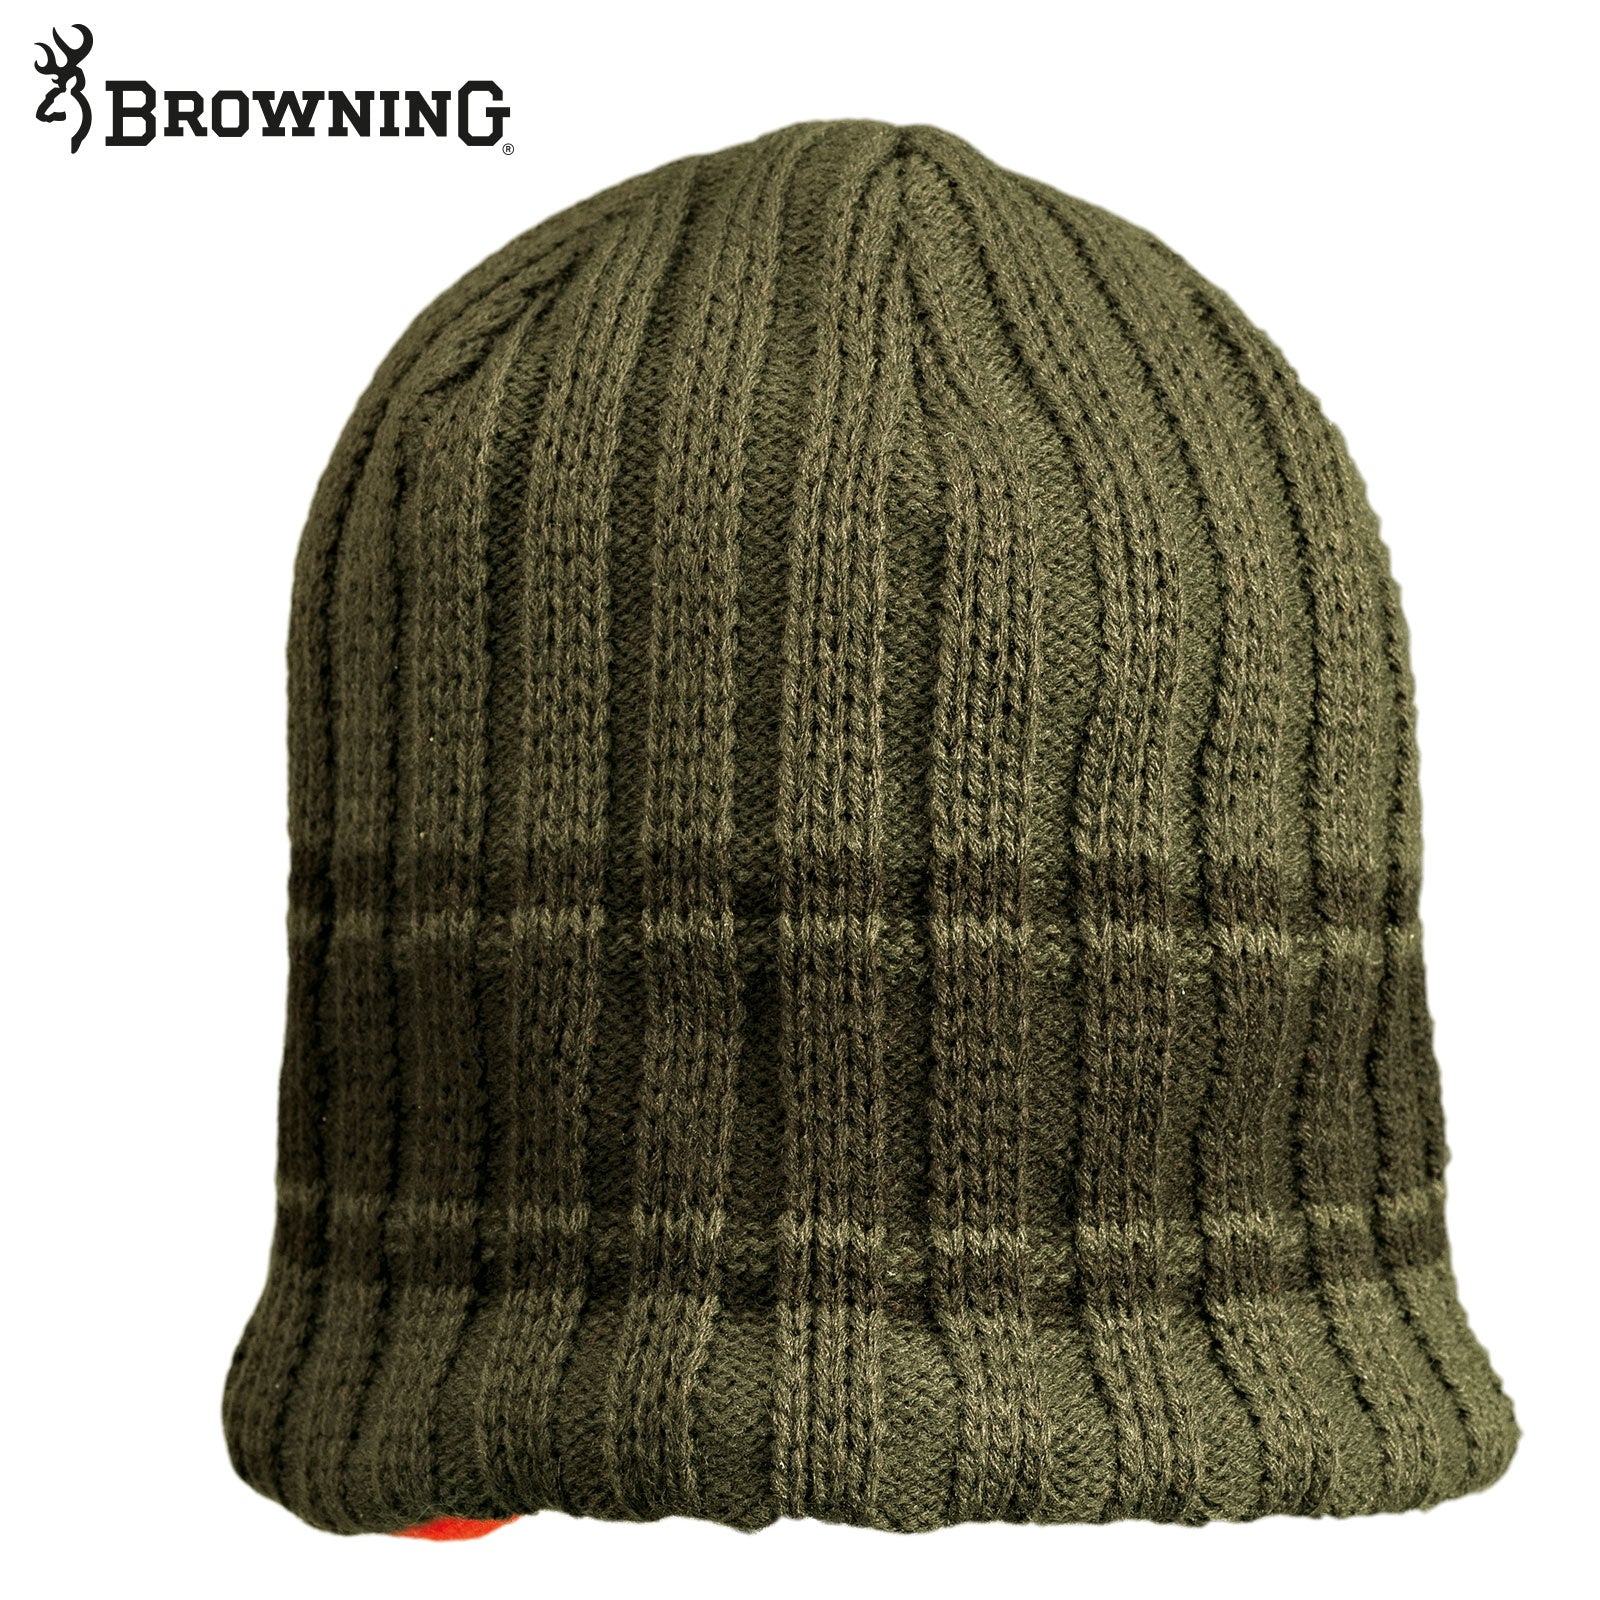 Browning Bob Polarfleece Beanie - Green/Orange